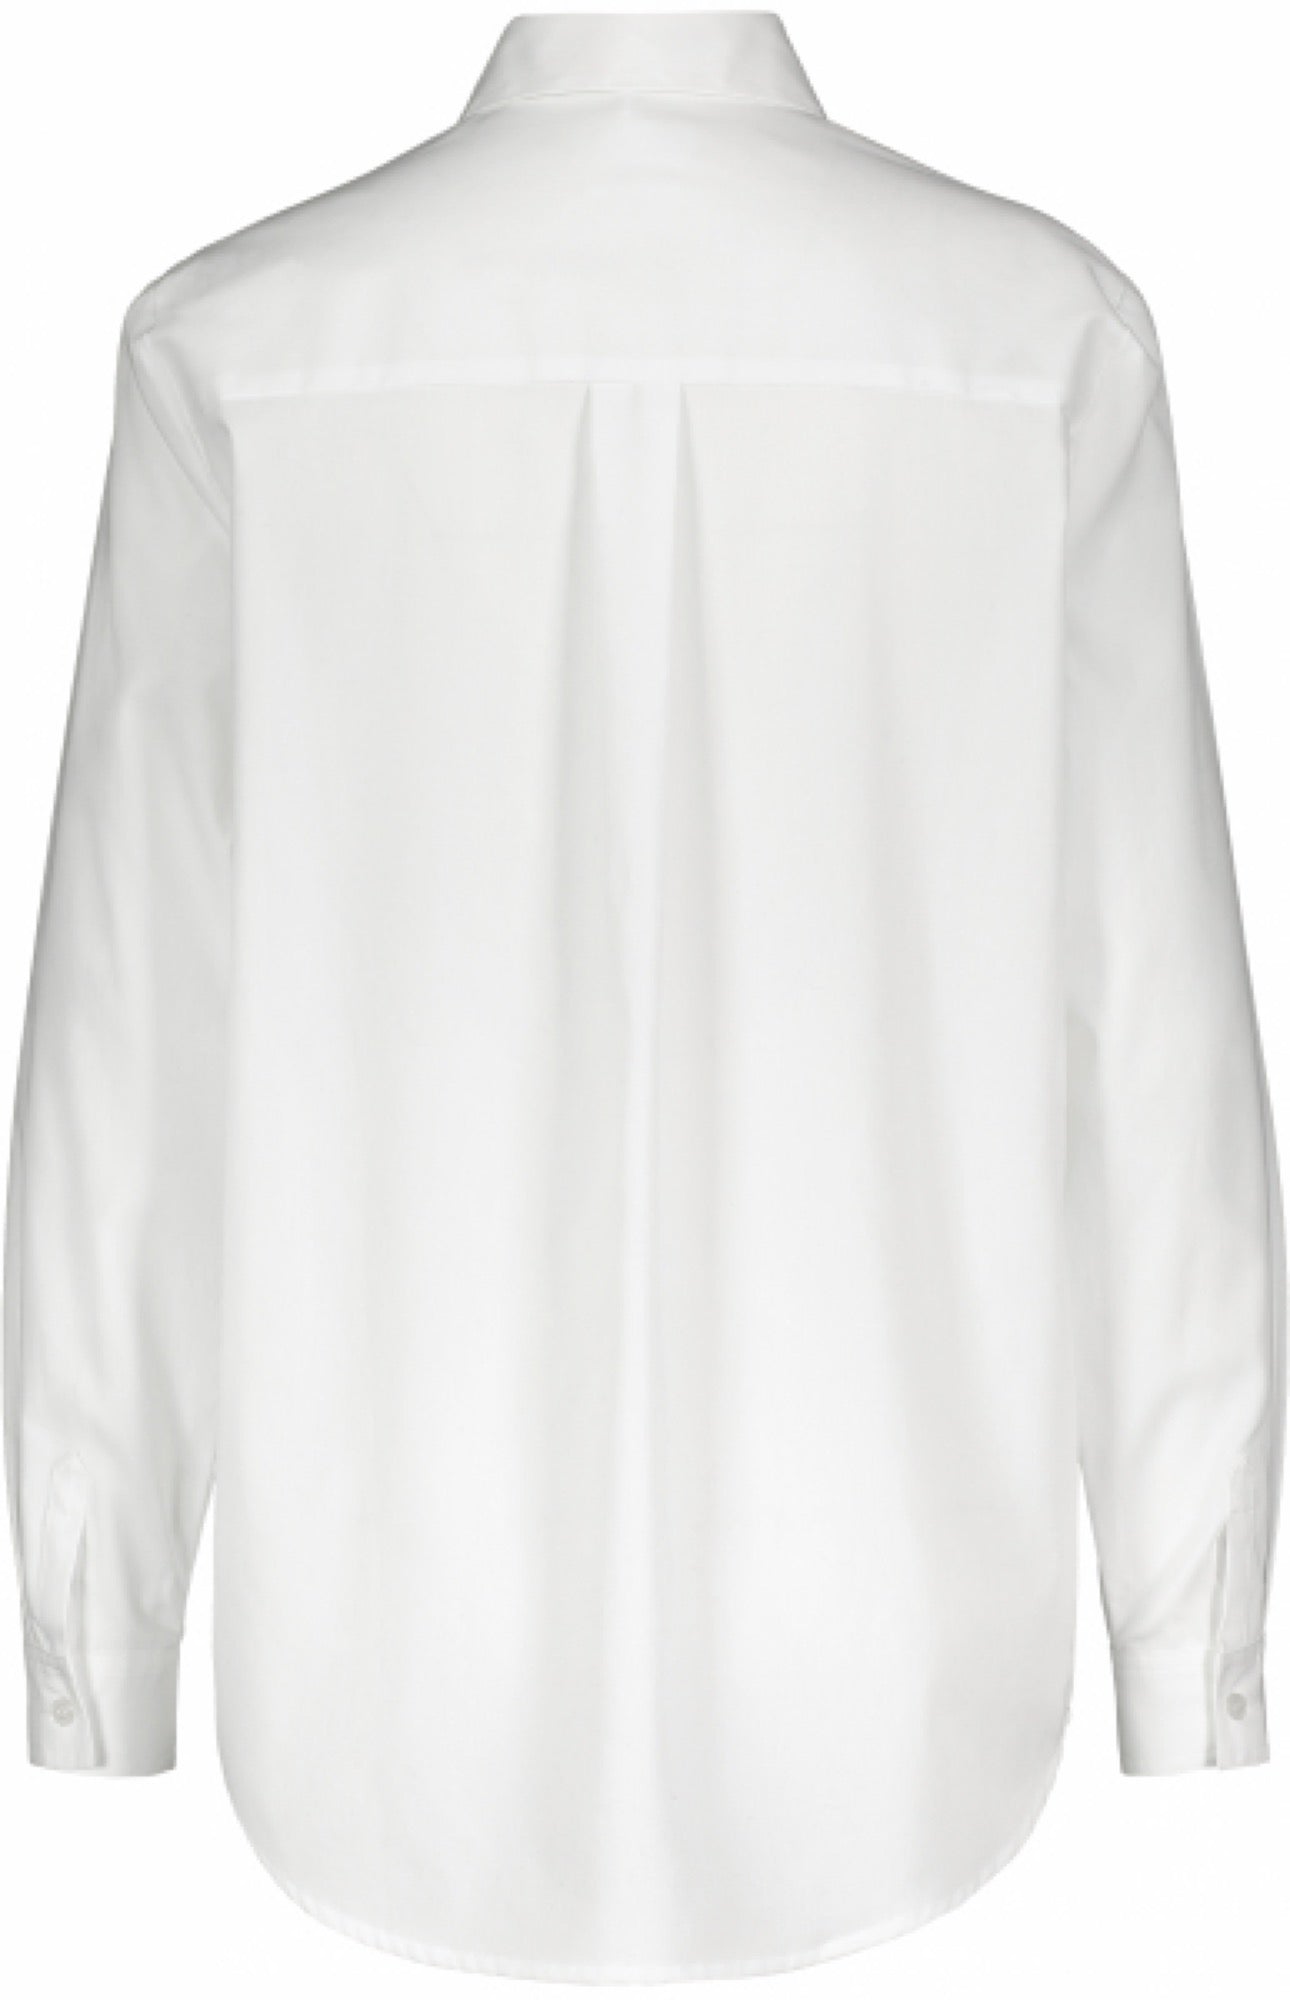 Cala Shirt - Bright White - Creative Collective - Bluser & Skjorter - VILLOID.no